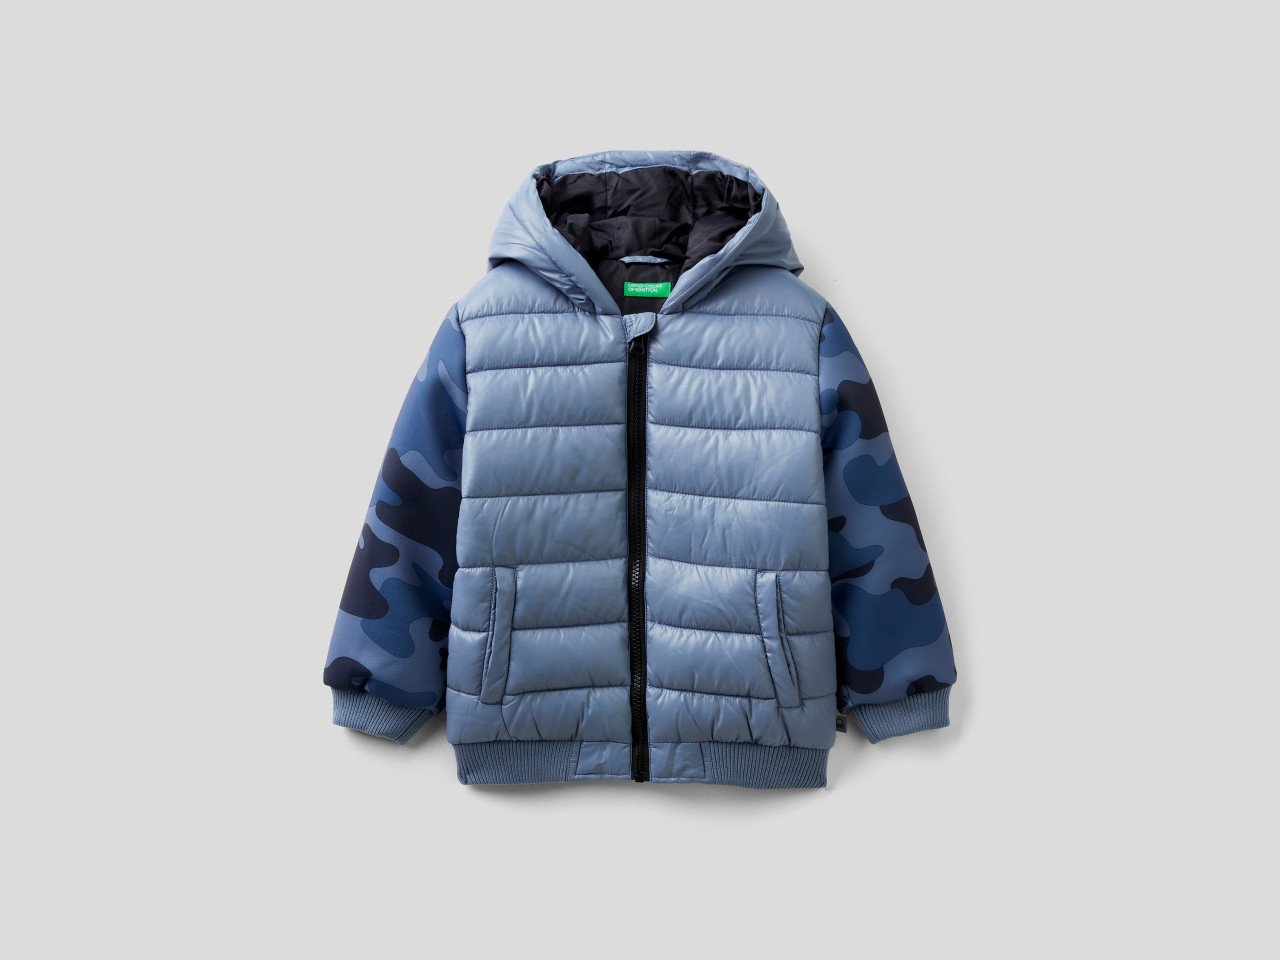 KIDS FASHION Jackets Jean Benetton light jacket discount 78% Blue 82                  EU 